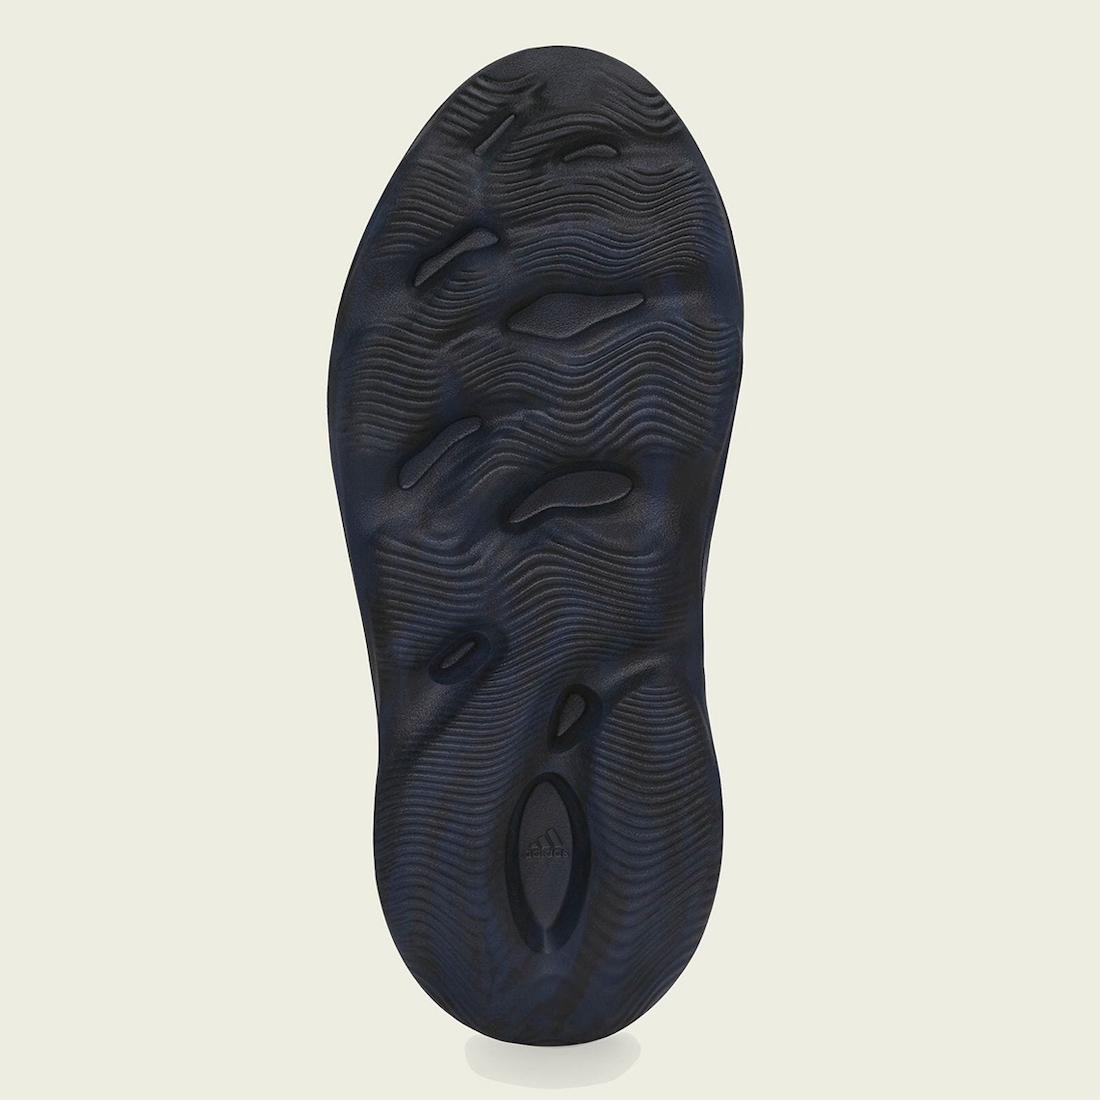 adidas Yeezy Foam Runner Mineral Blue GV7903 Release Date